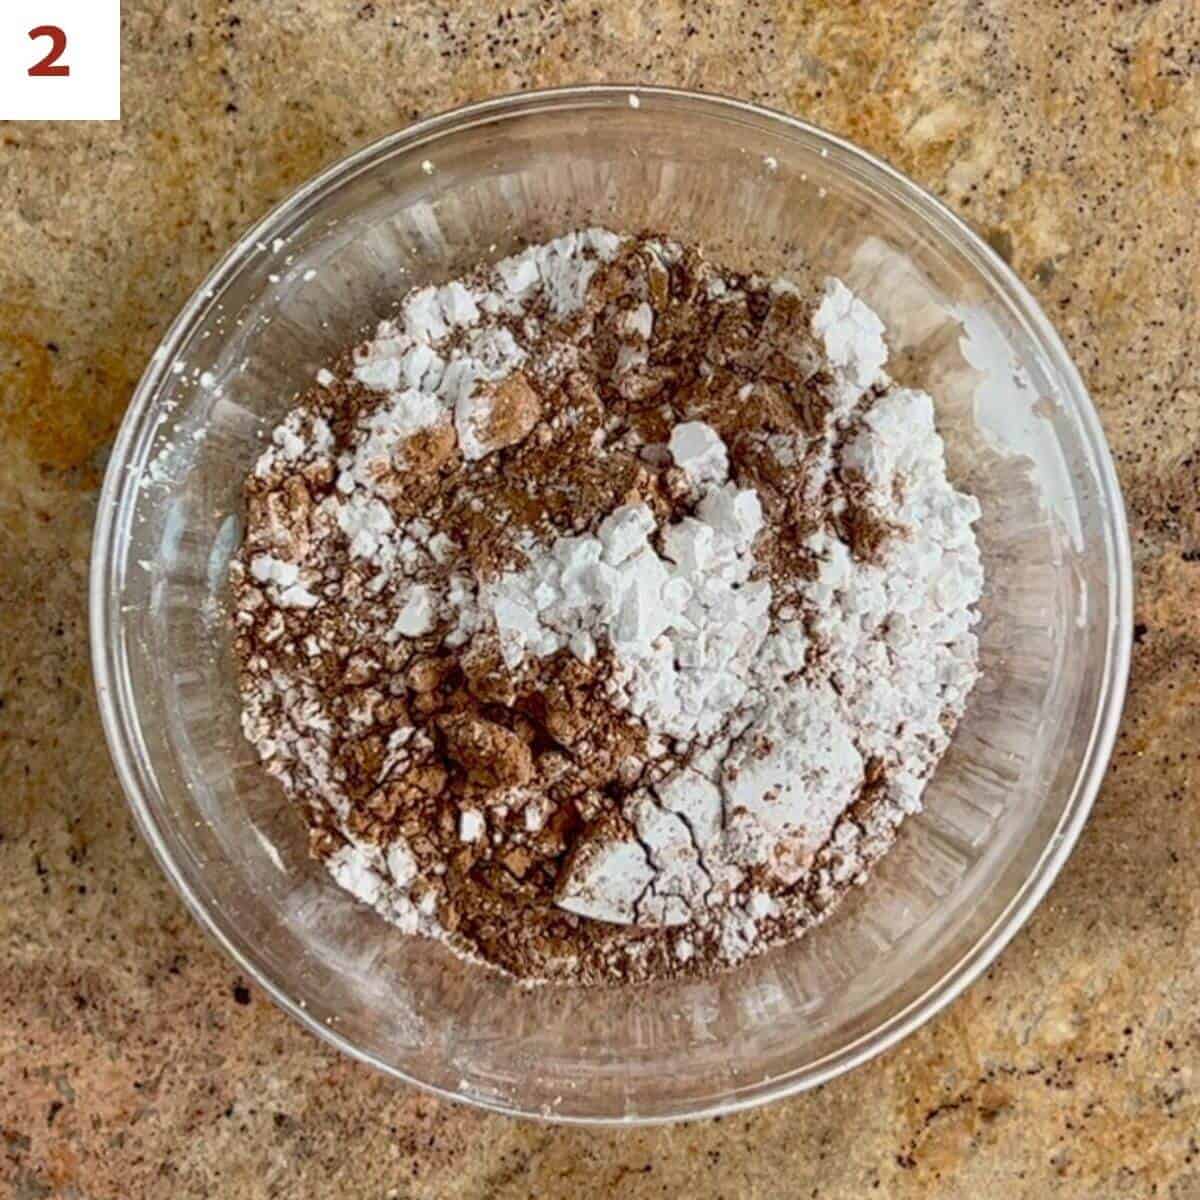 powdered sugar & cocoa powder in a glass bowl.